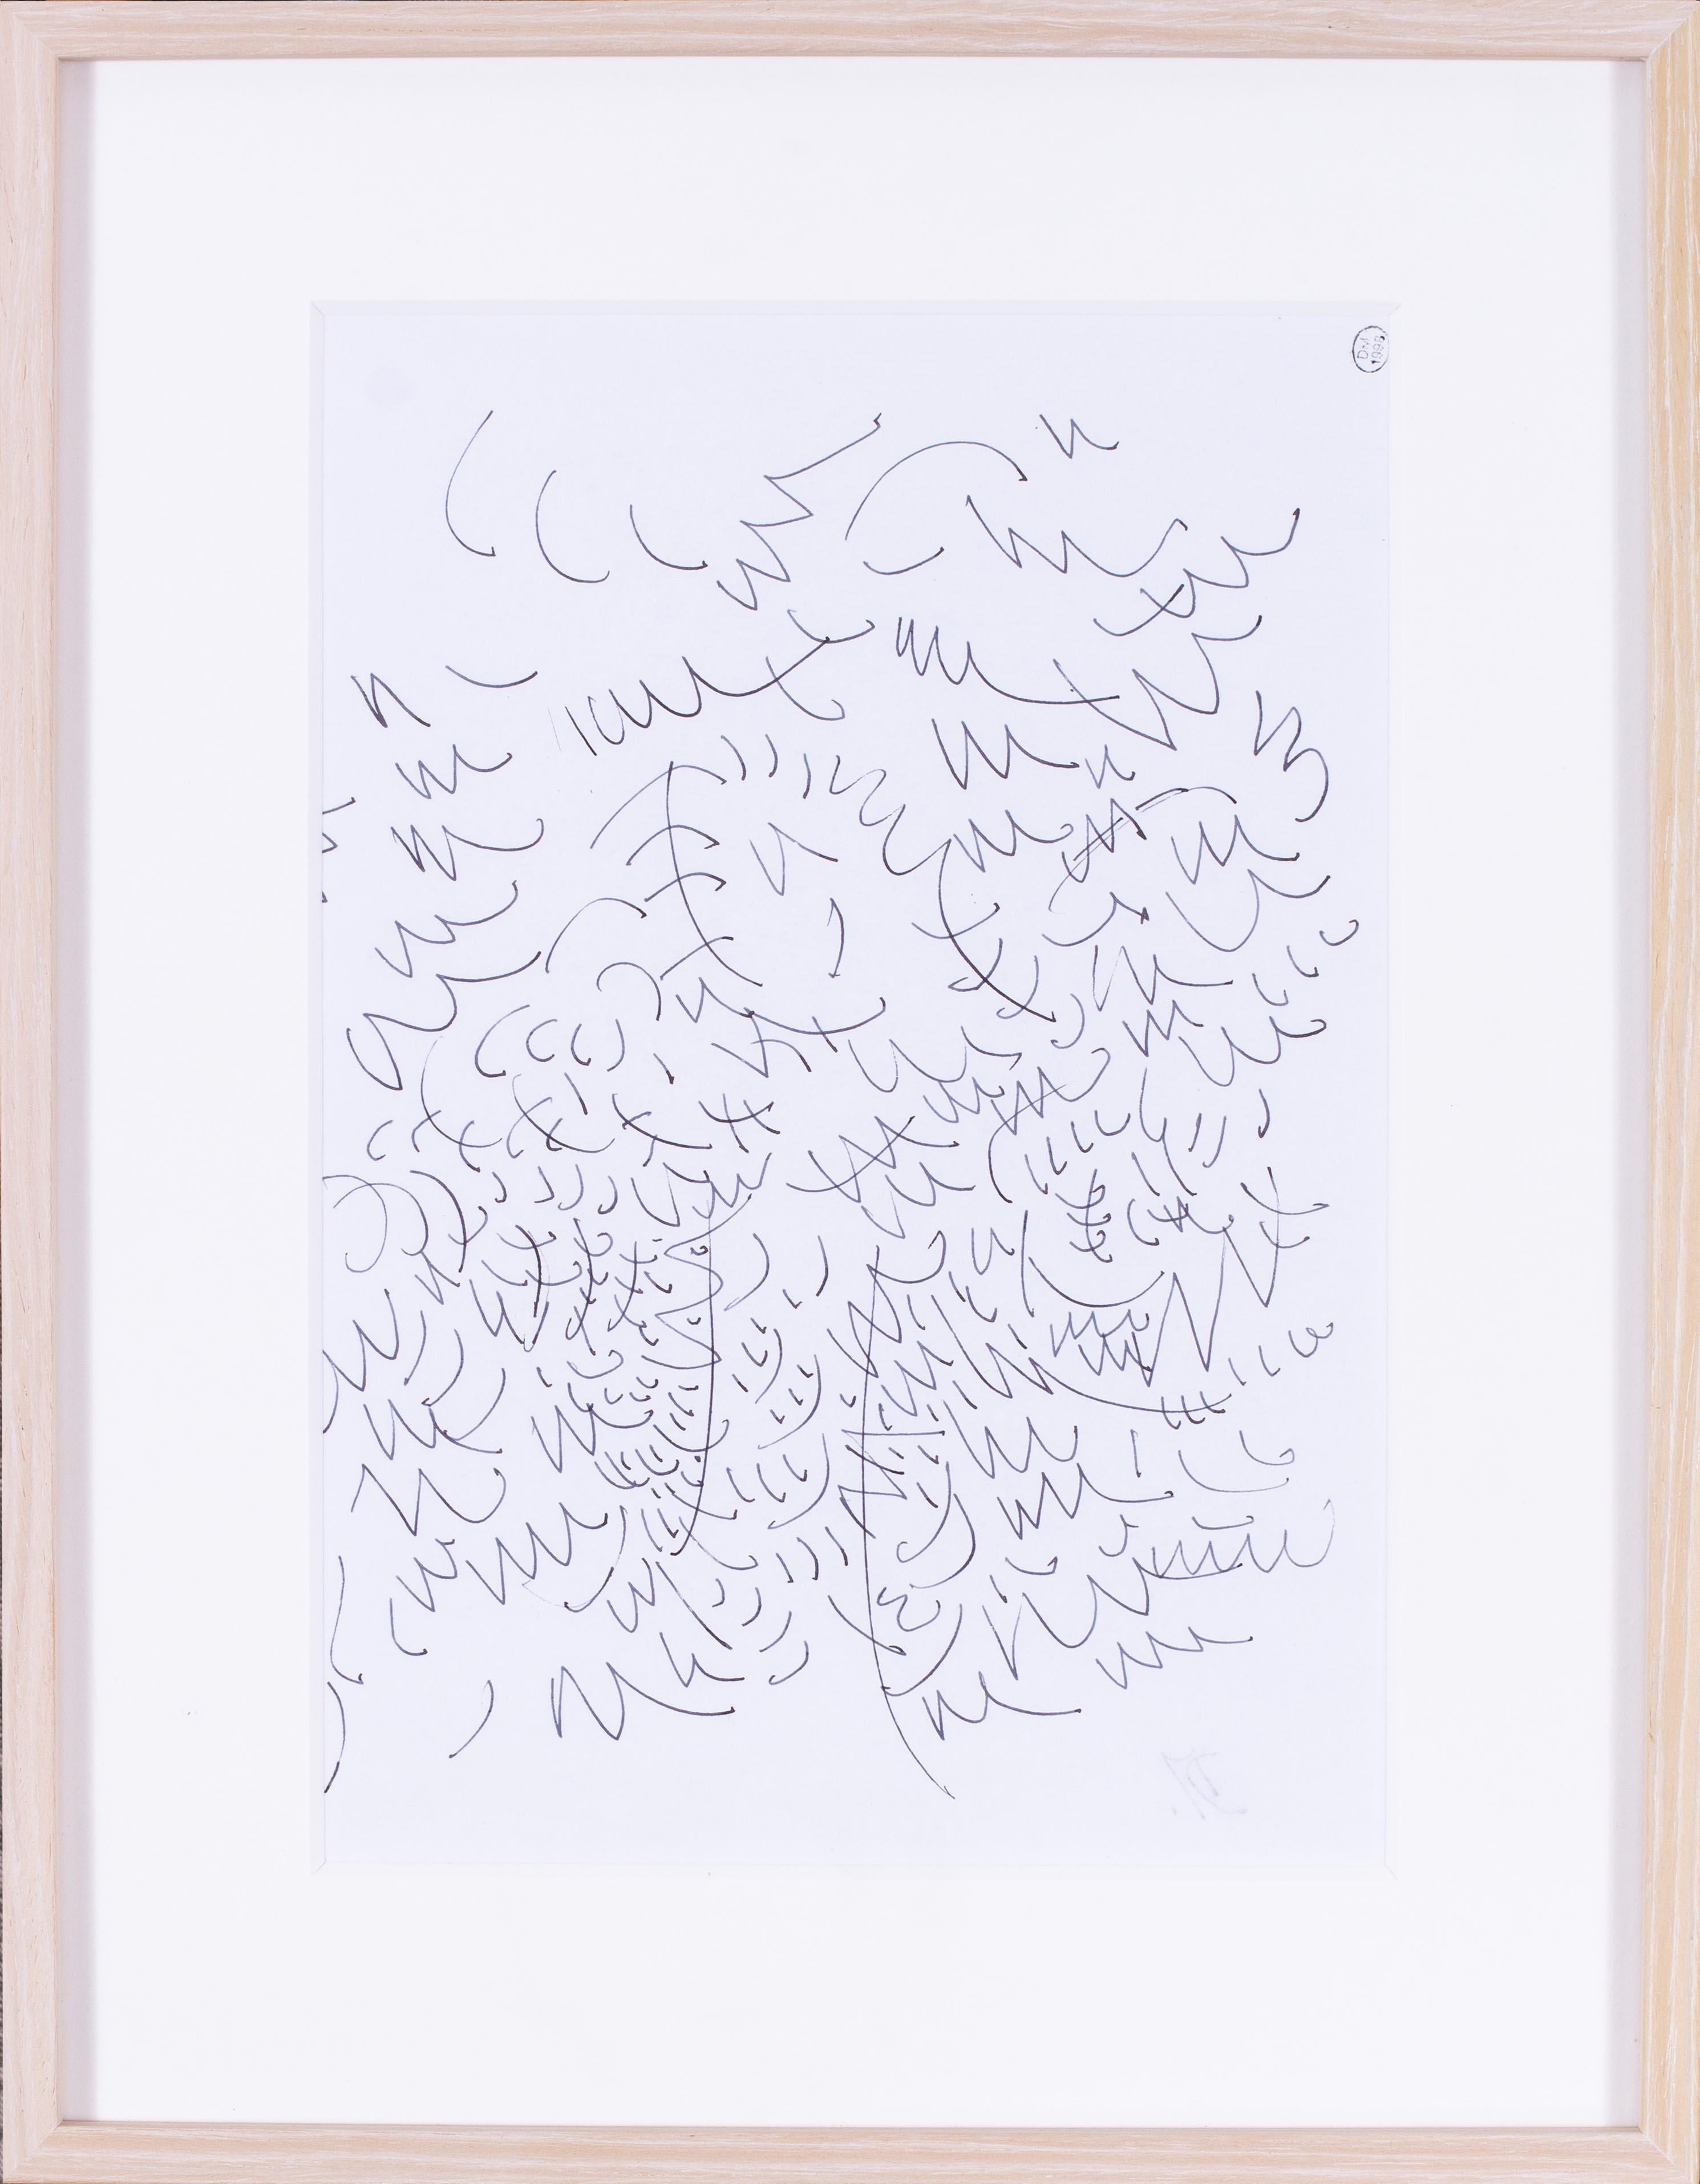 dessin à l'encre d'origine d'un arbre par Dora Maar, (la muse de Picasso), 1998